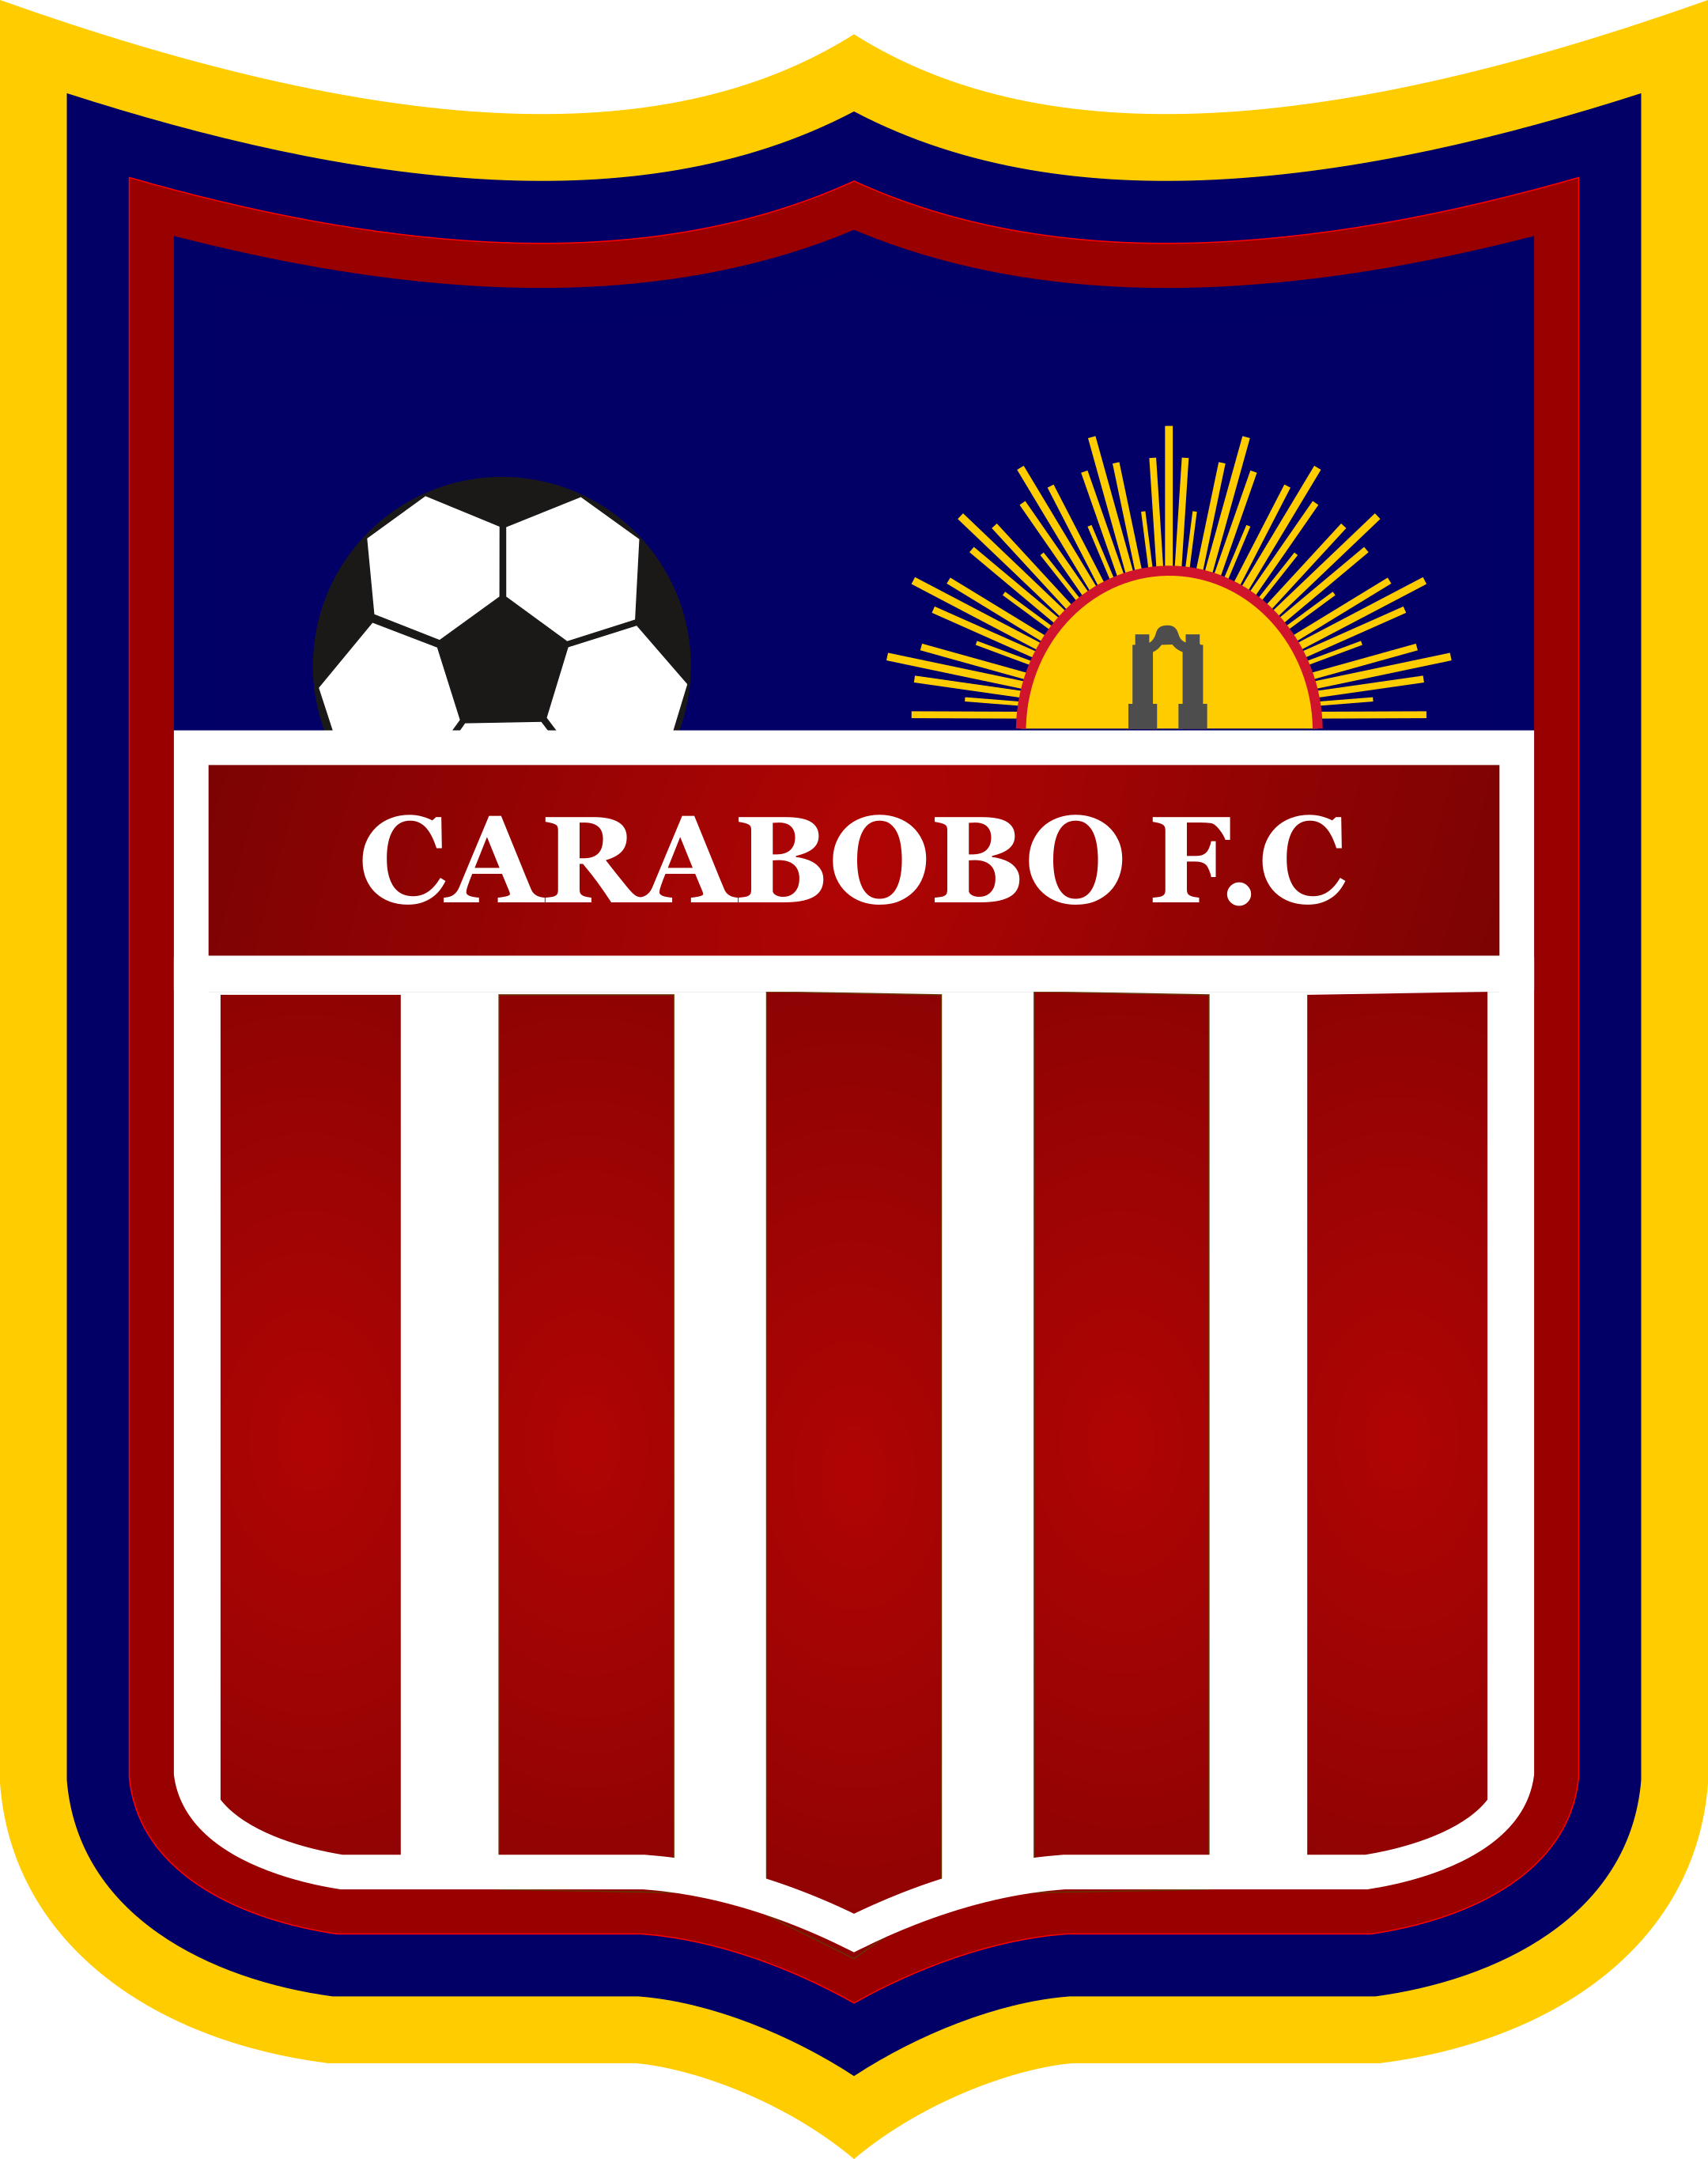 carabobo fc 1 - Carabobo FC Logo